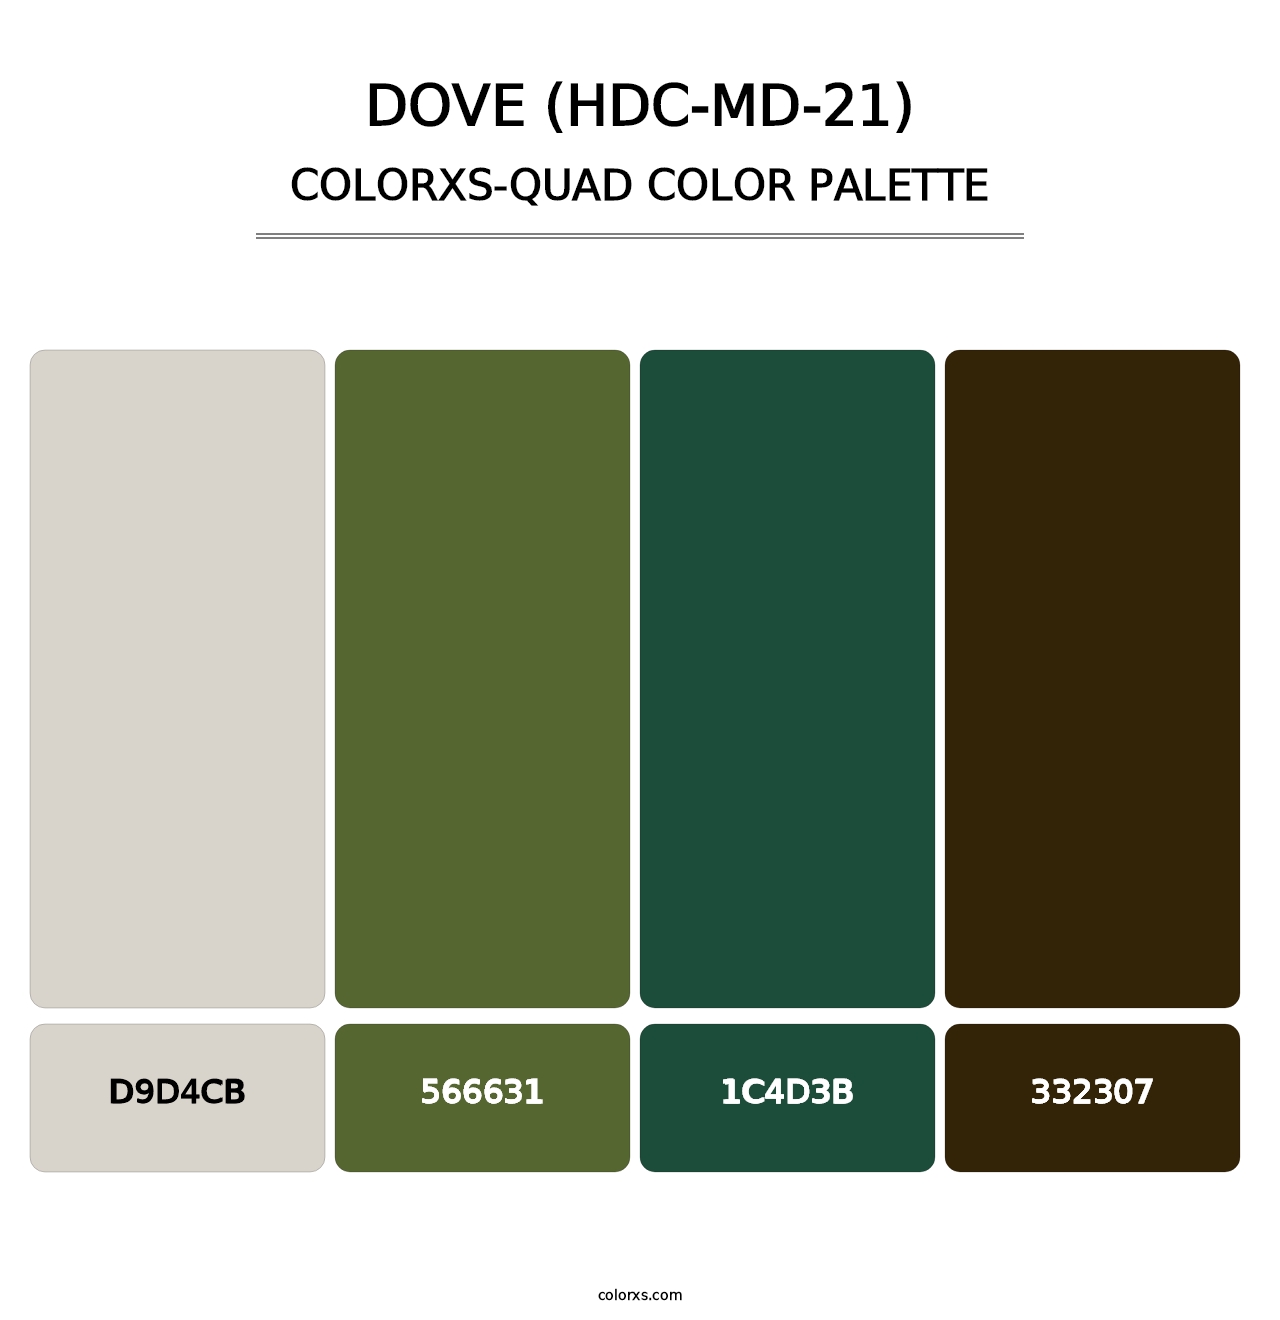 Dove (HDC-MD-21) - Colorxs Quad Palette